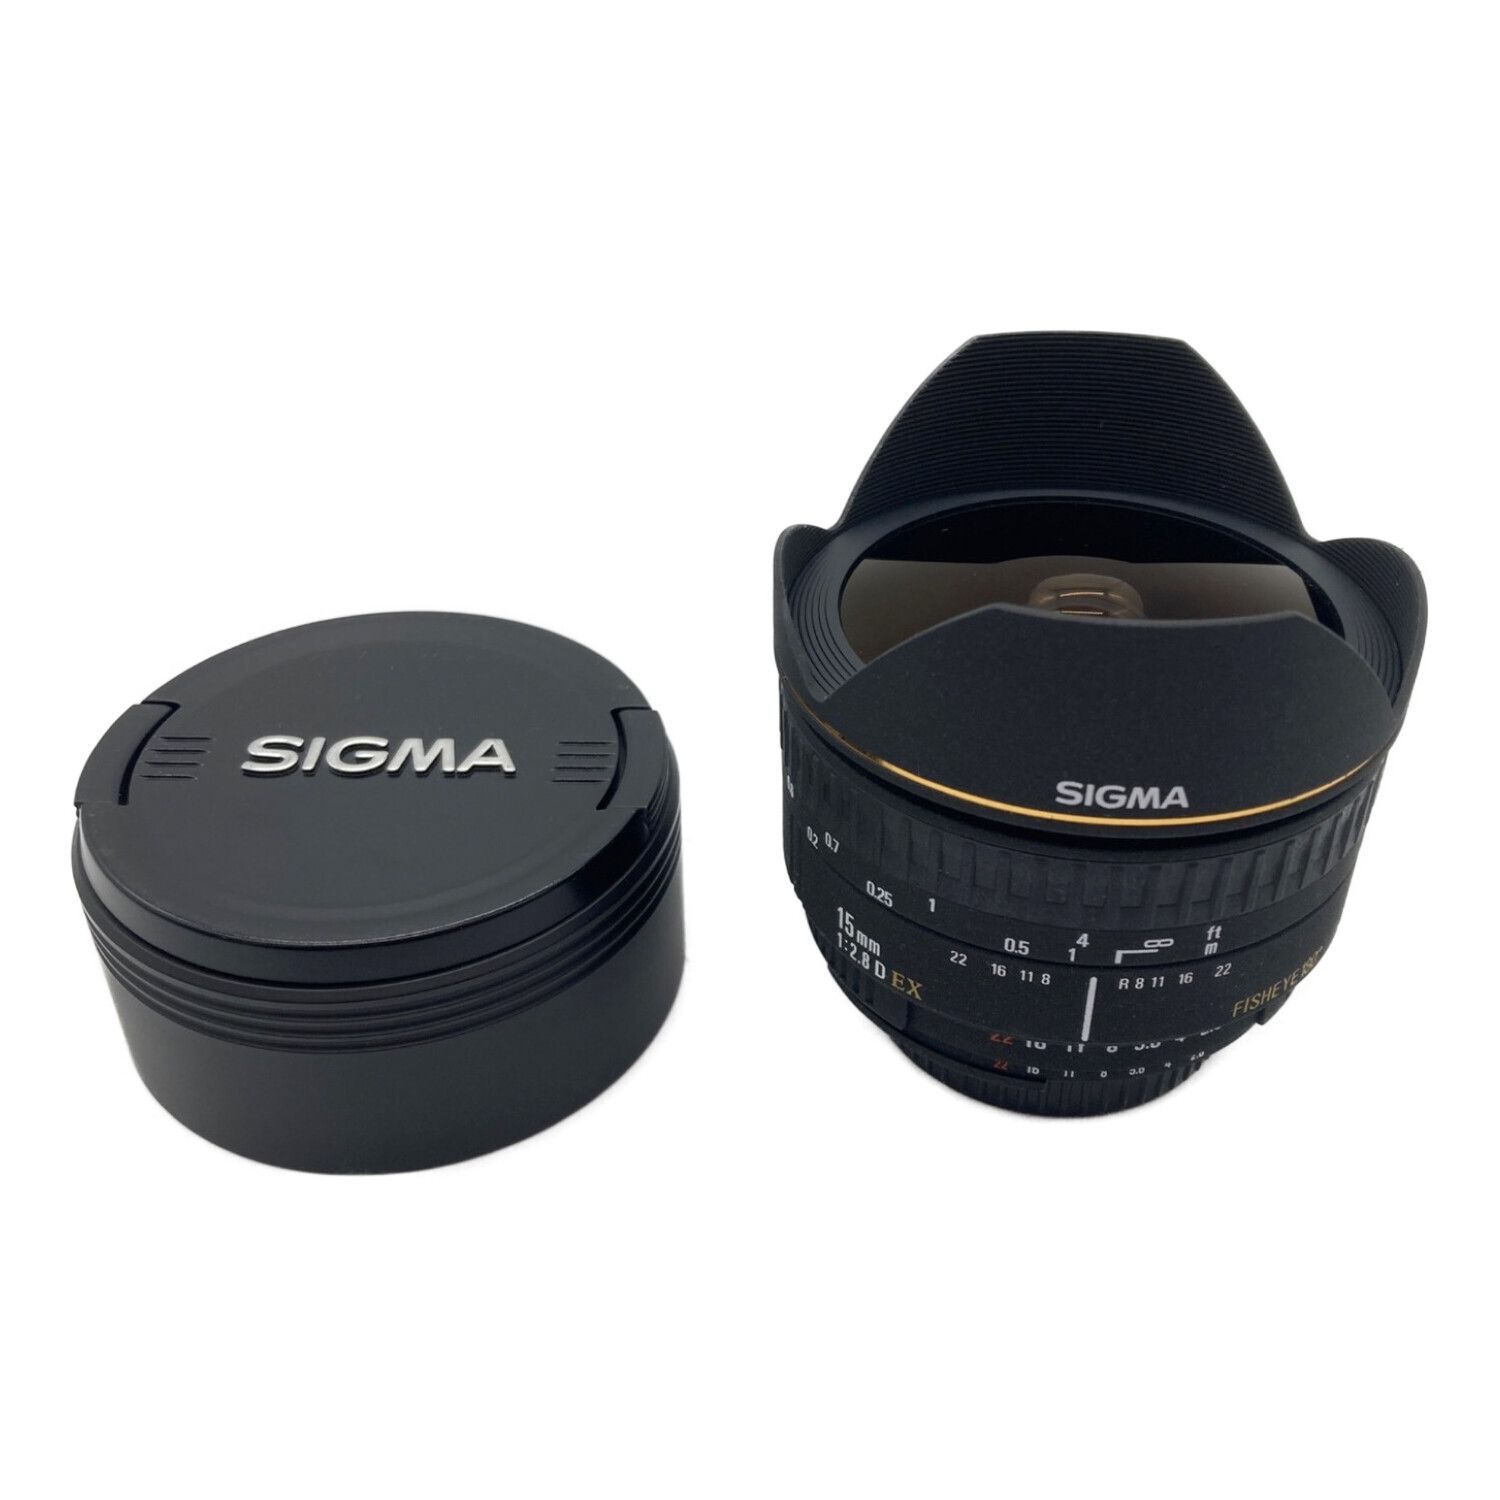 SIGMA 単焦点魚眼レンズ 15mm F2.8 EX DG DIAGONAL FISHEYE キヤノン用